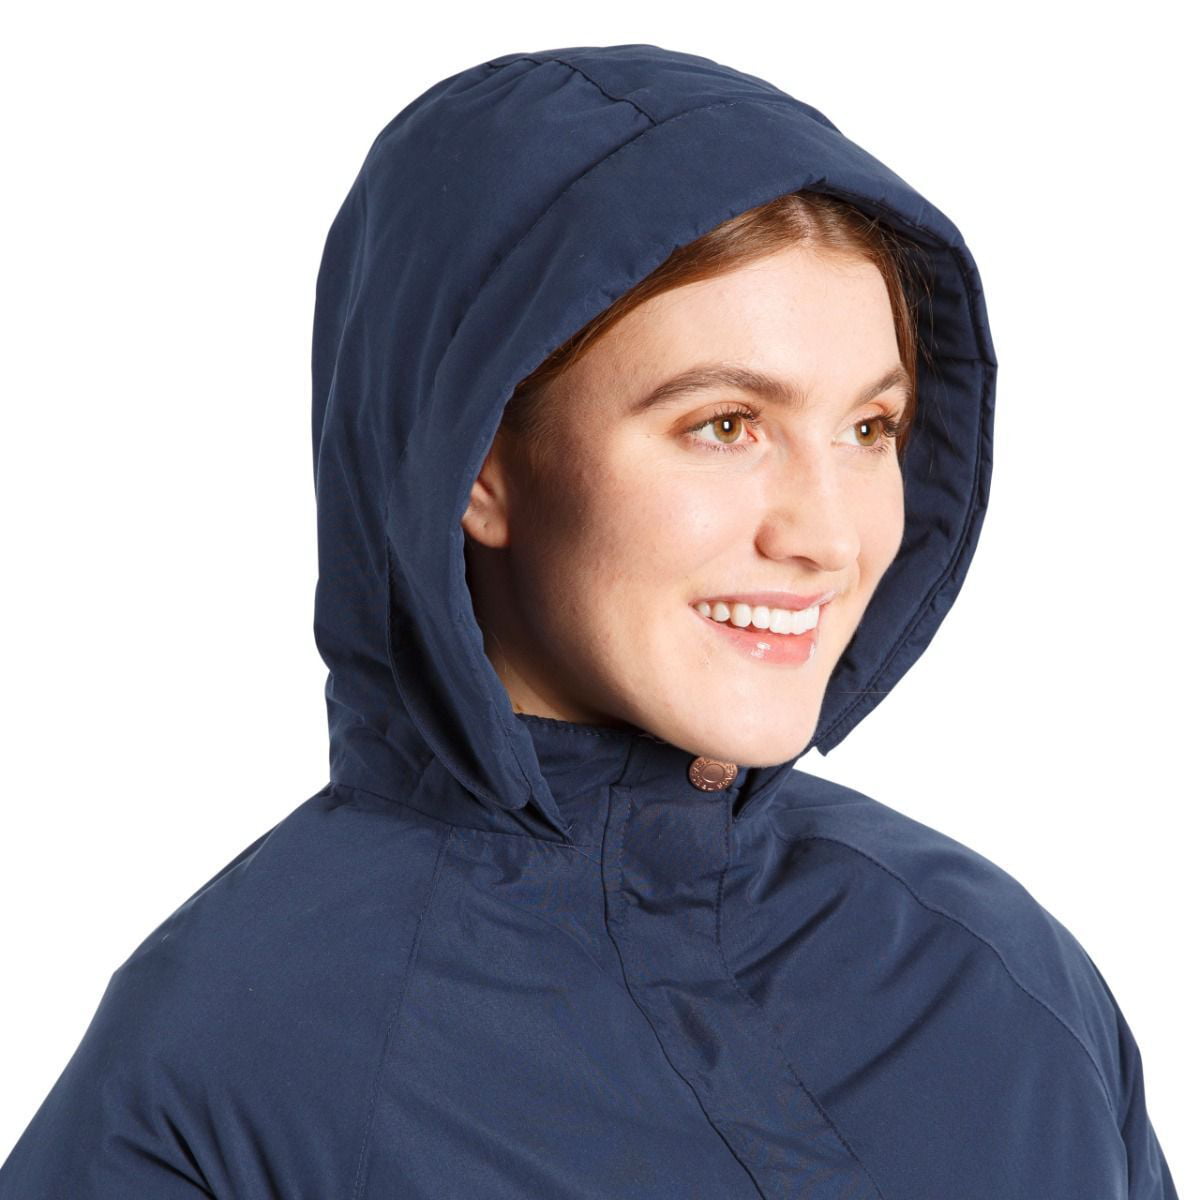 Trespass Women's Muddle Waterproof Rain/outdoor Jacket